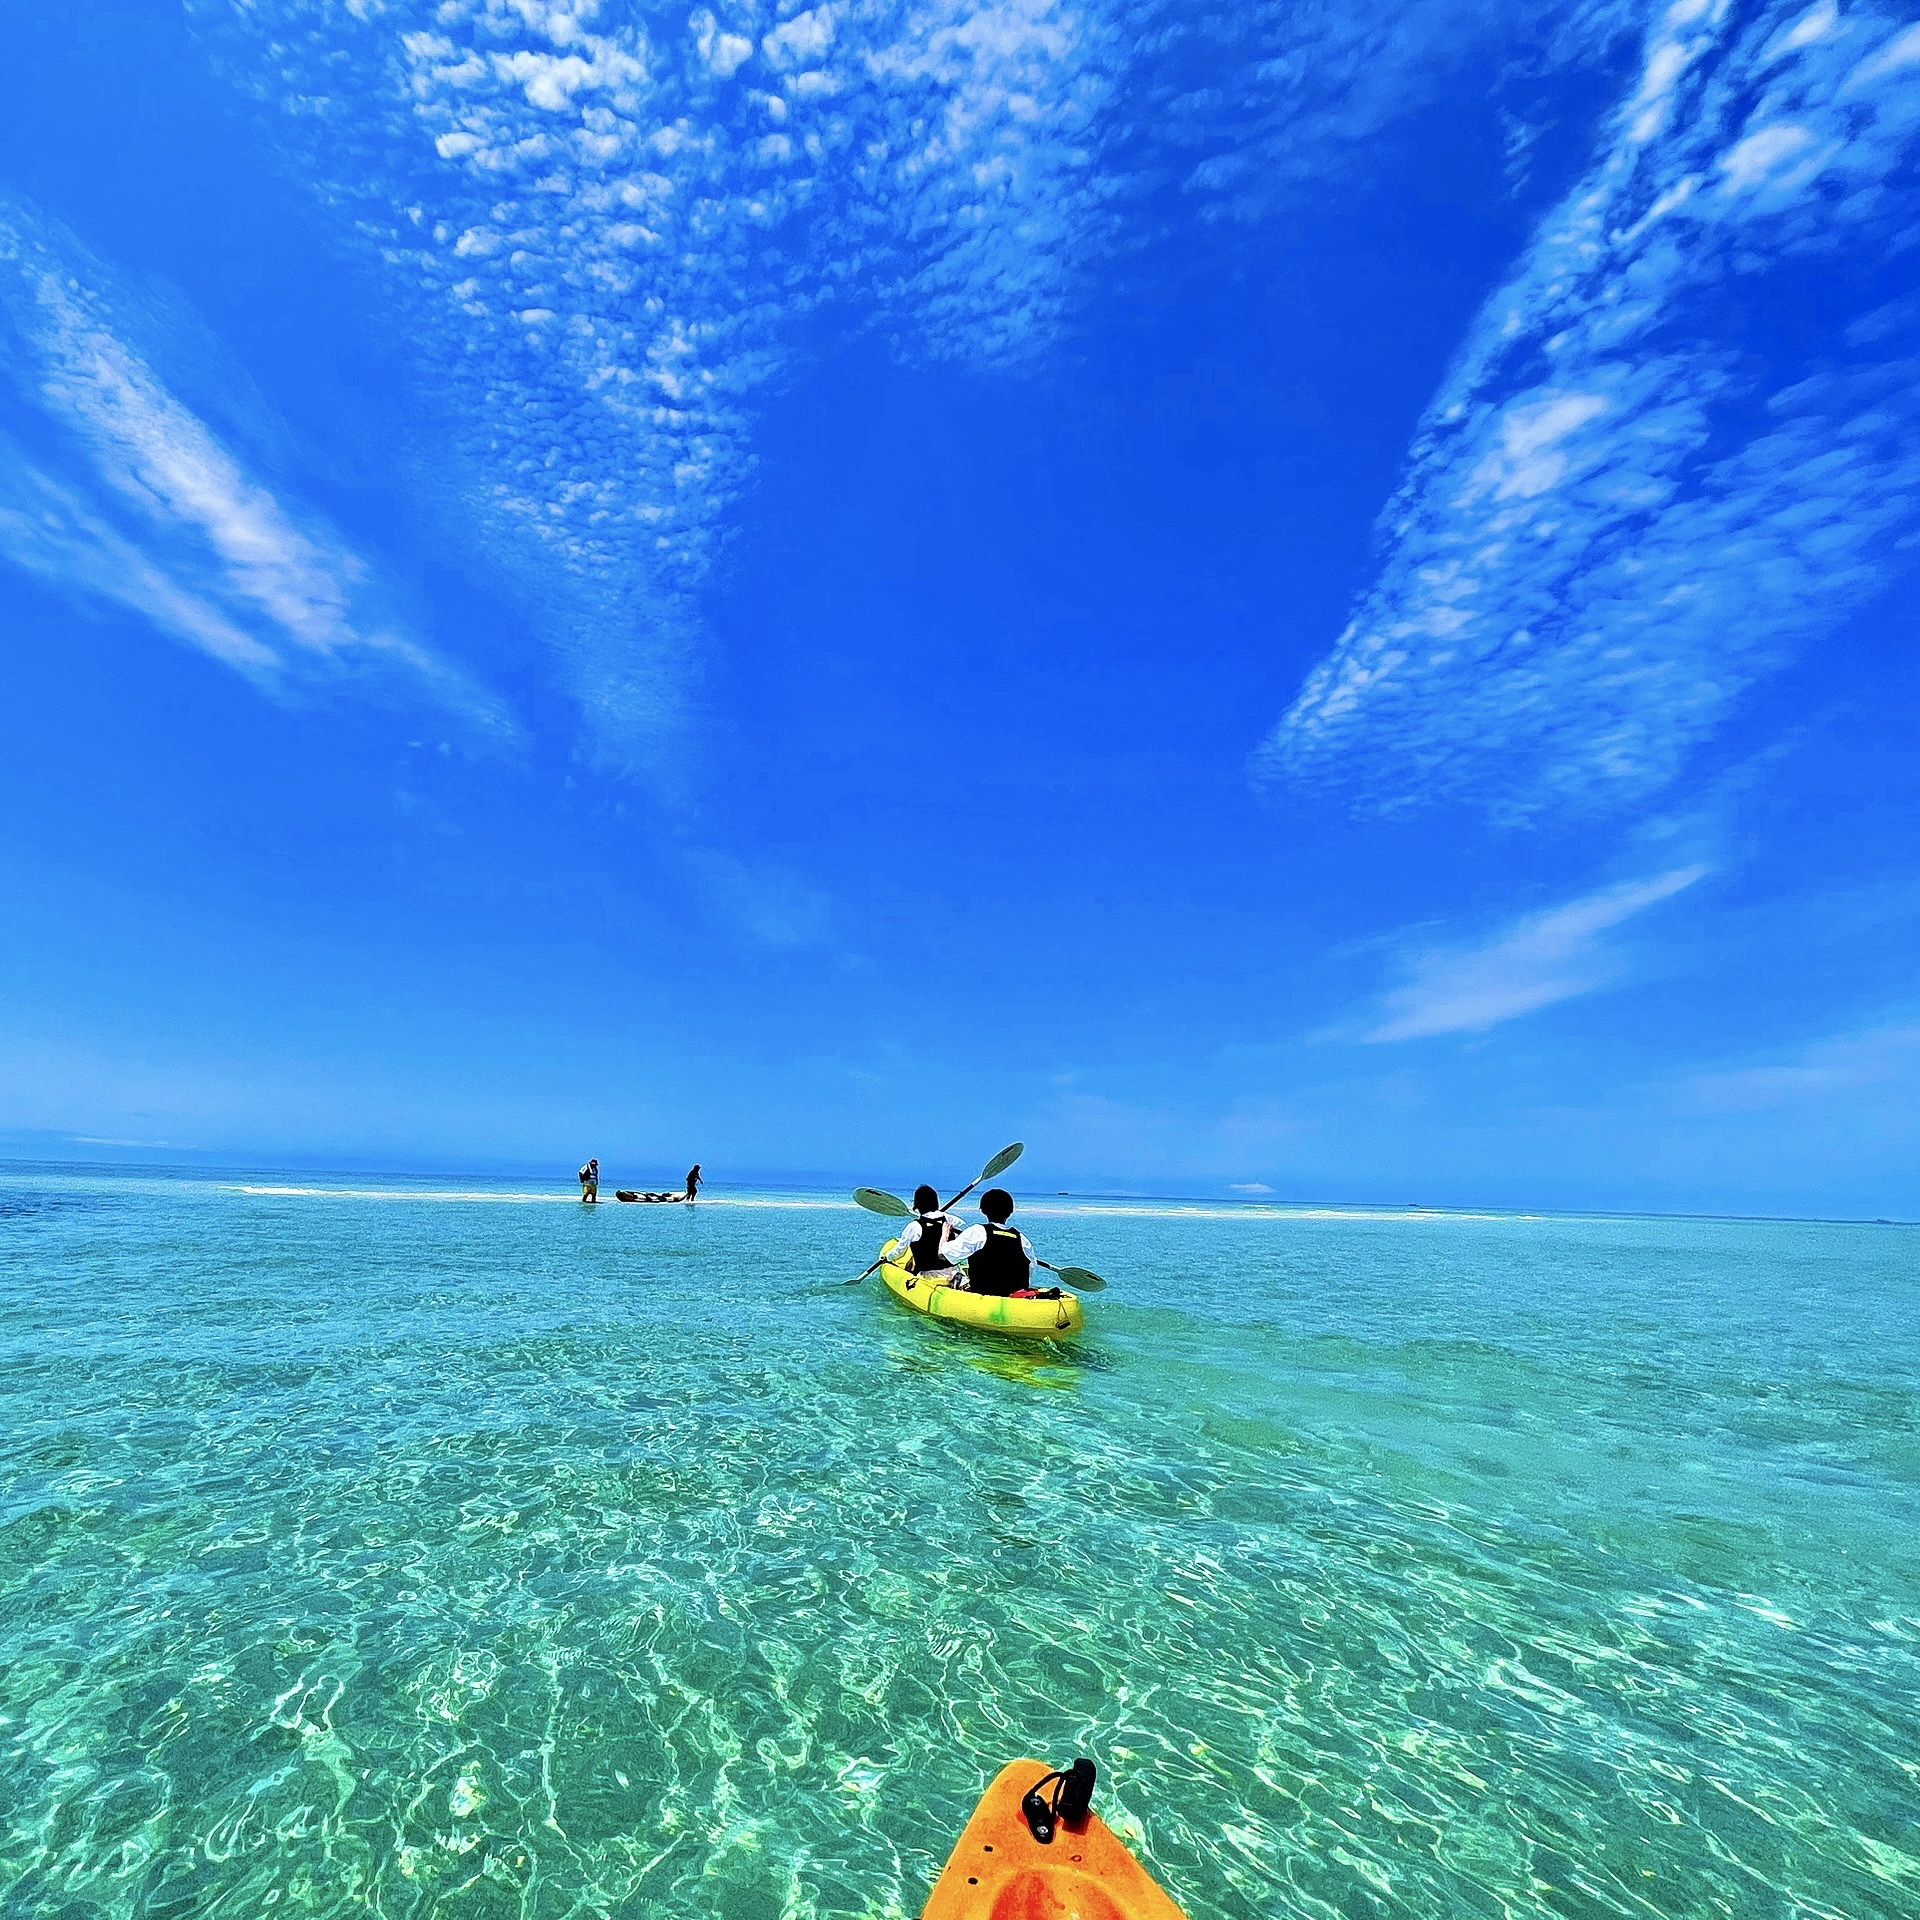 Sea Kayaking Tour to the Enchanting Island of "Unino hama"